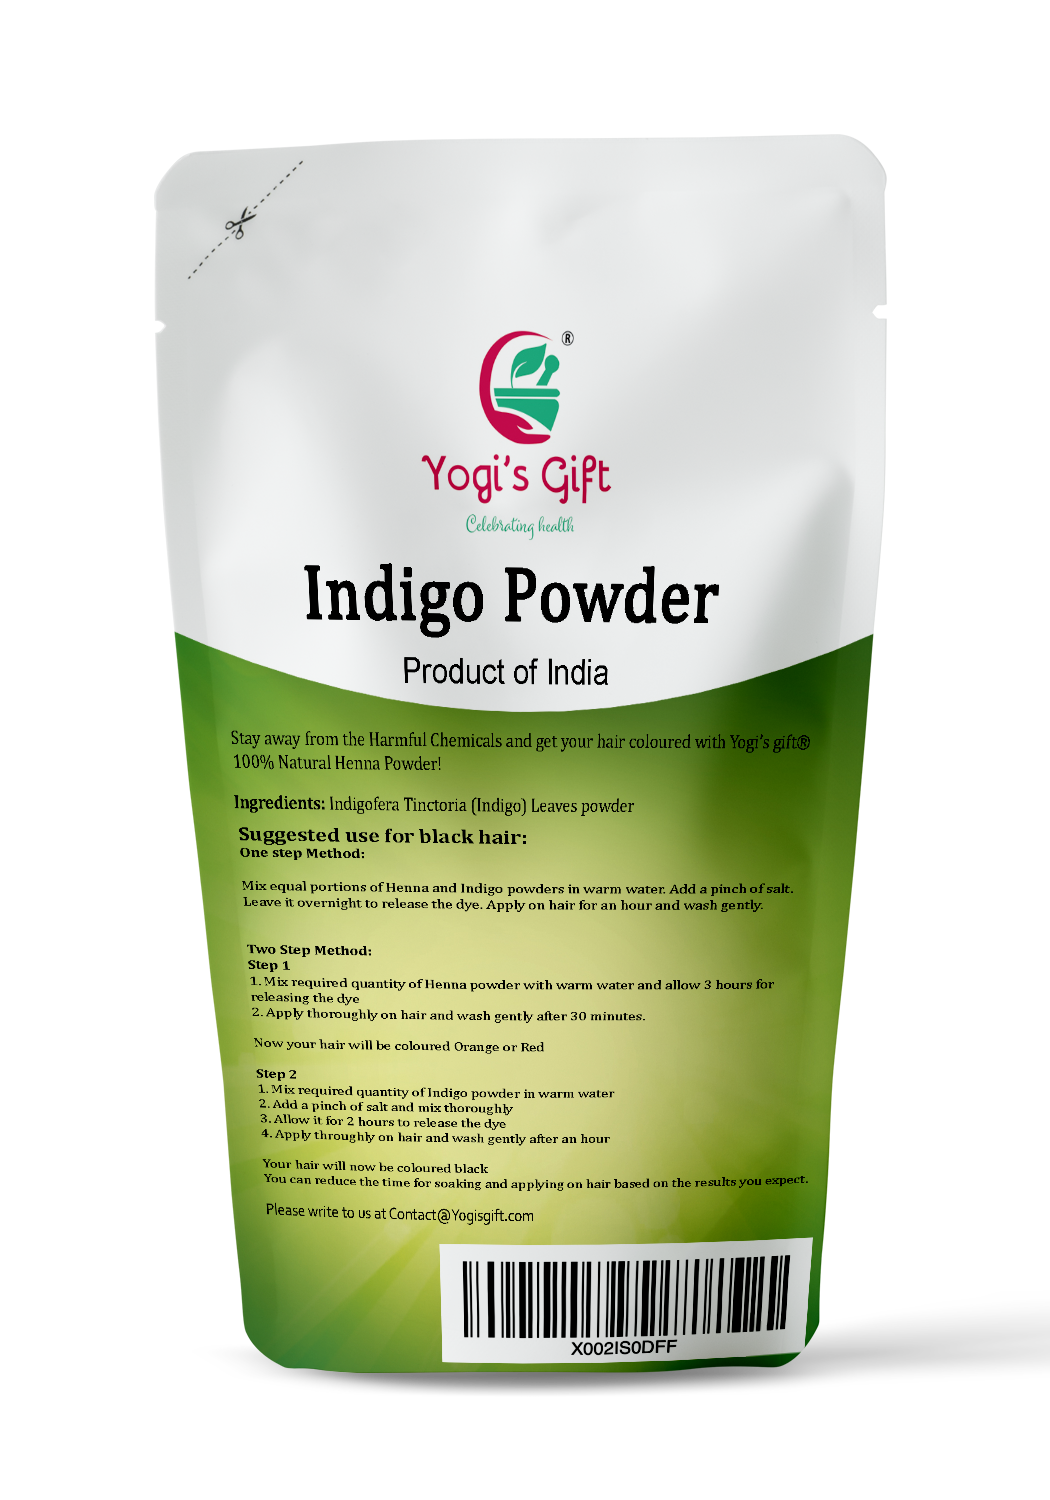 How To Mix: Indigo Powder For Hair